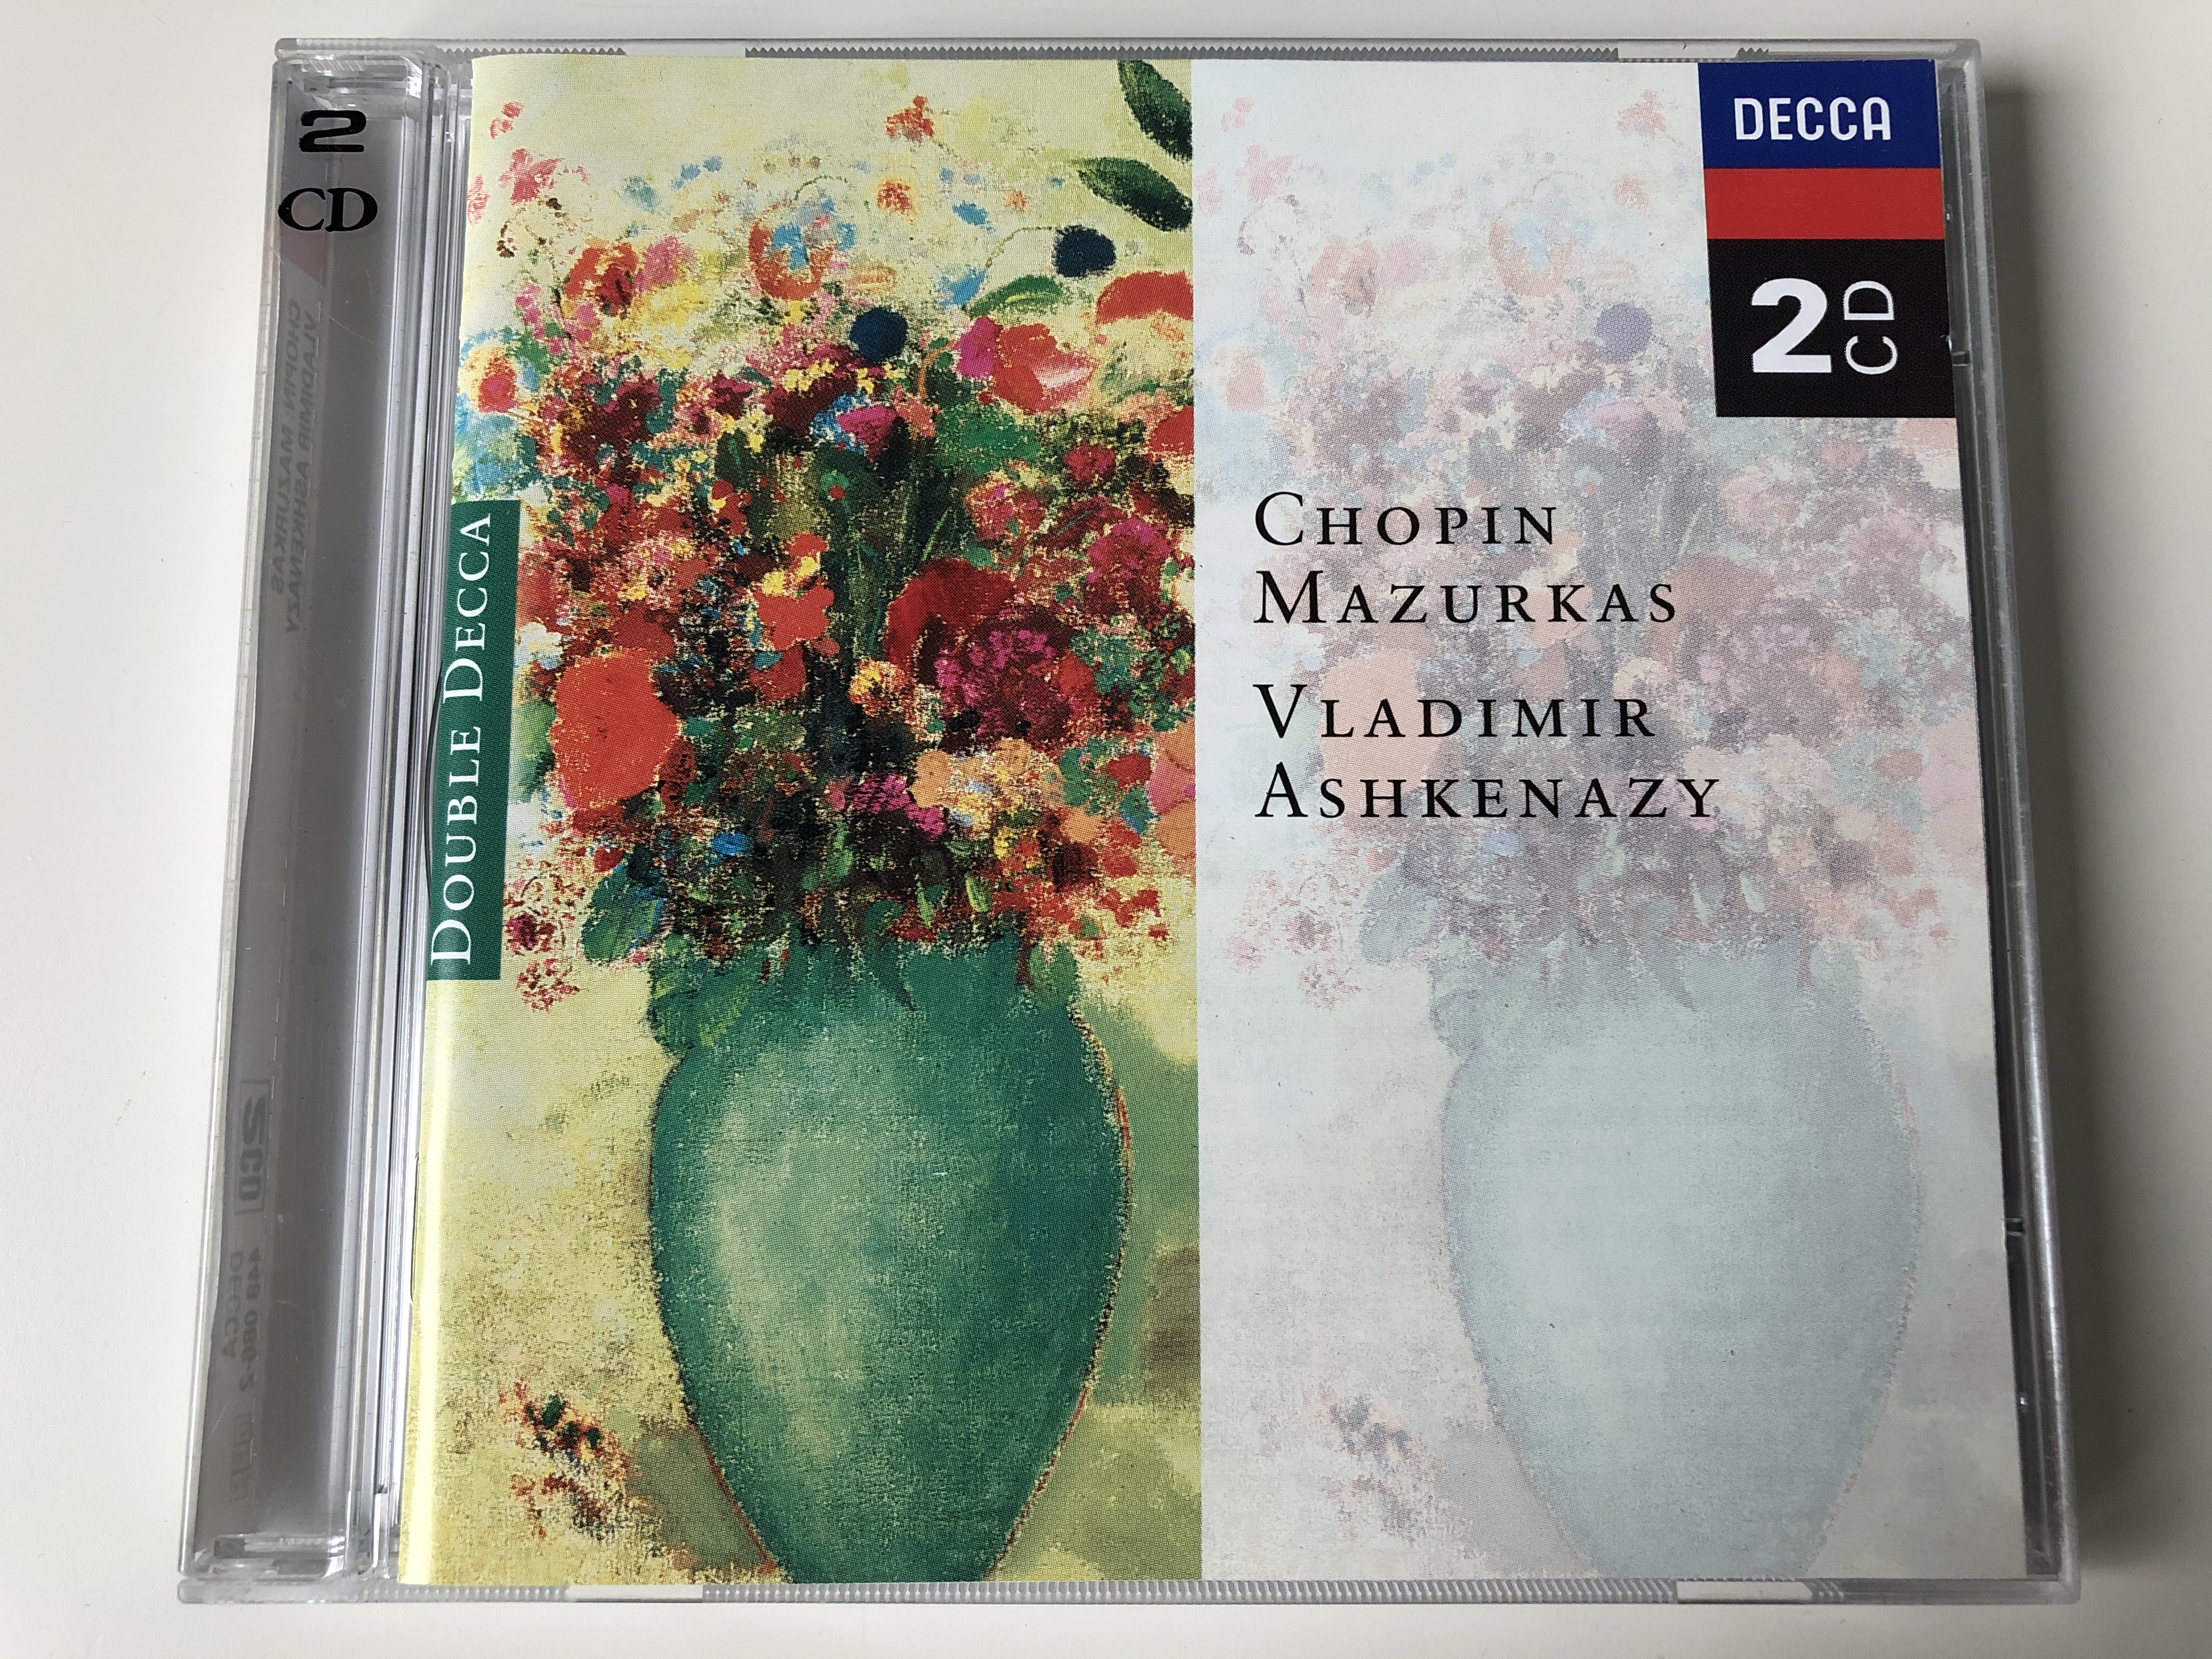 chopin-mazurkas-vladimir-ashkenazy-double-decca-decca-2x-audio-cd-1996-448-086-2-1-.jpg